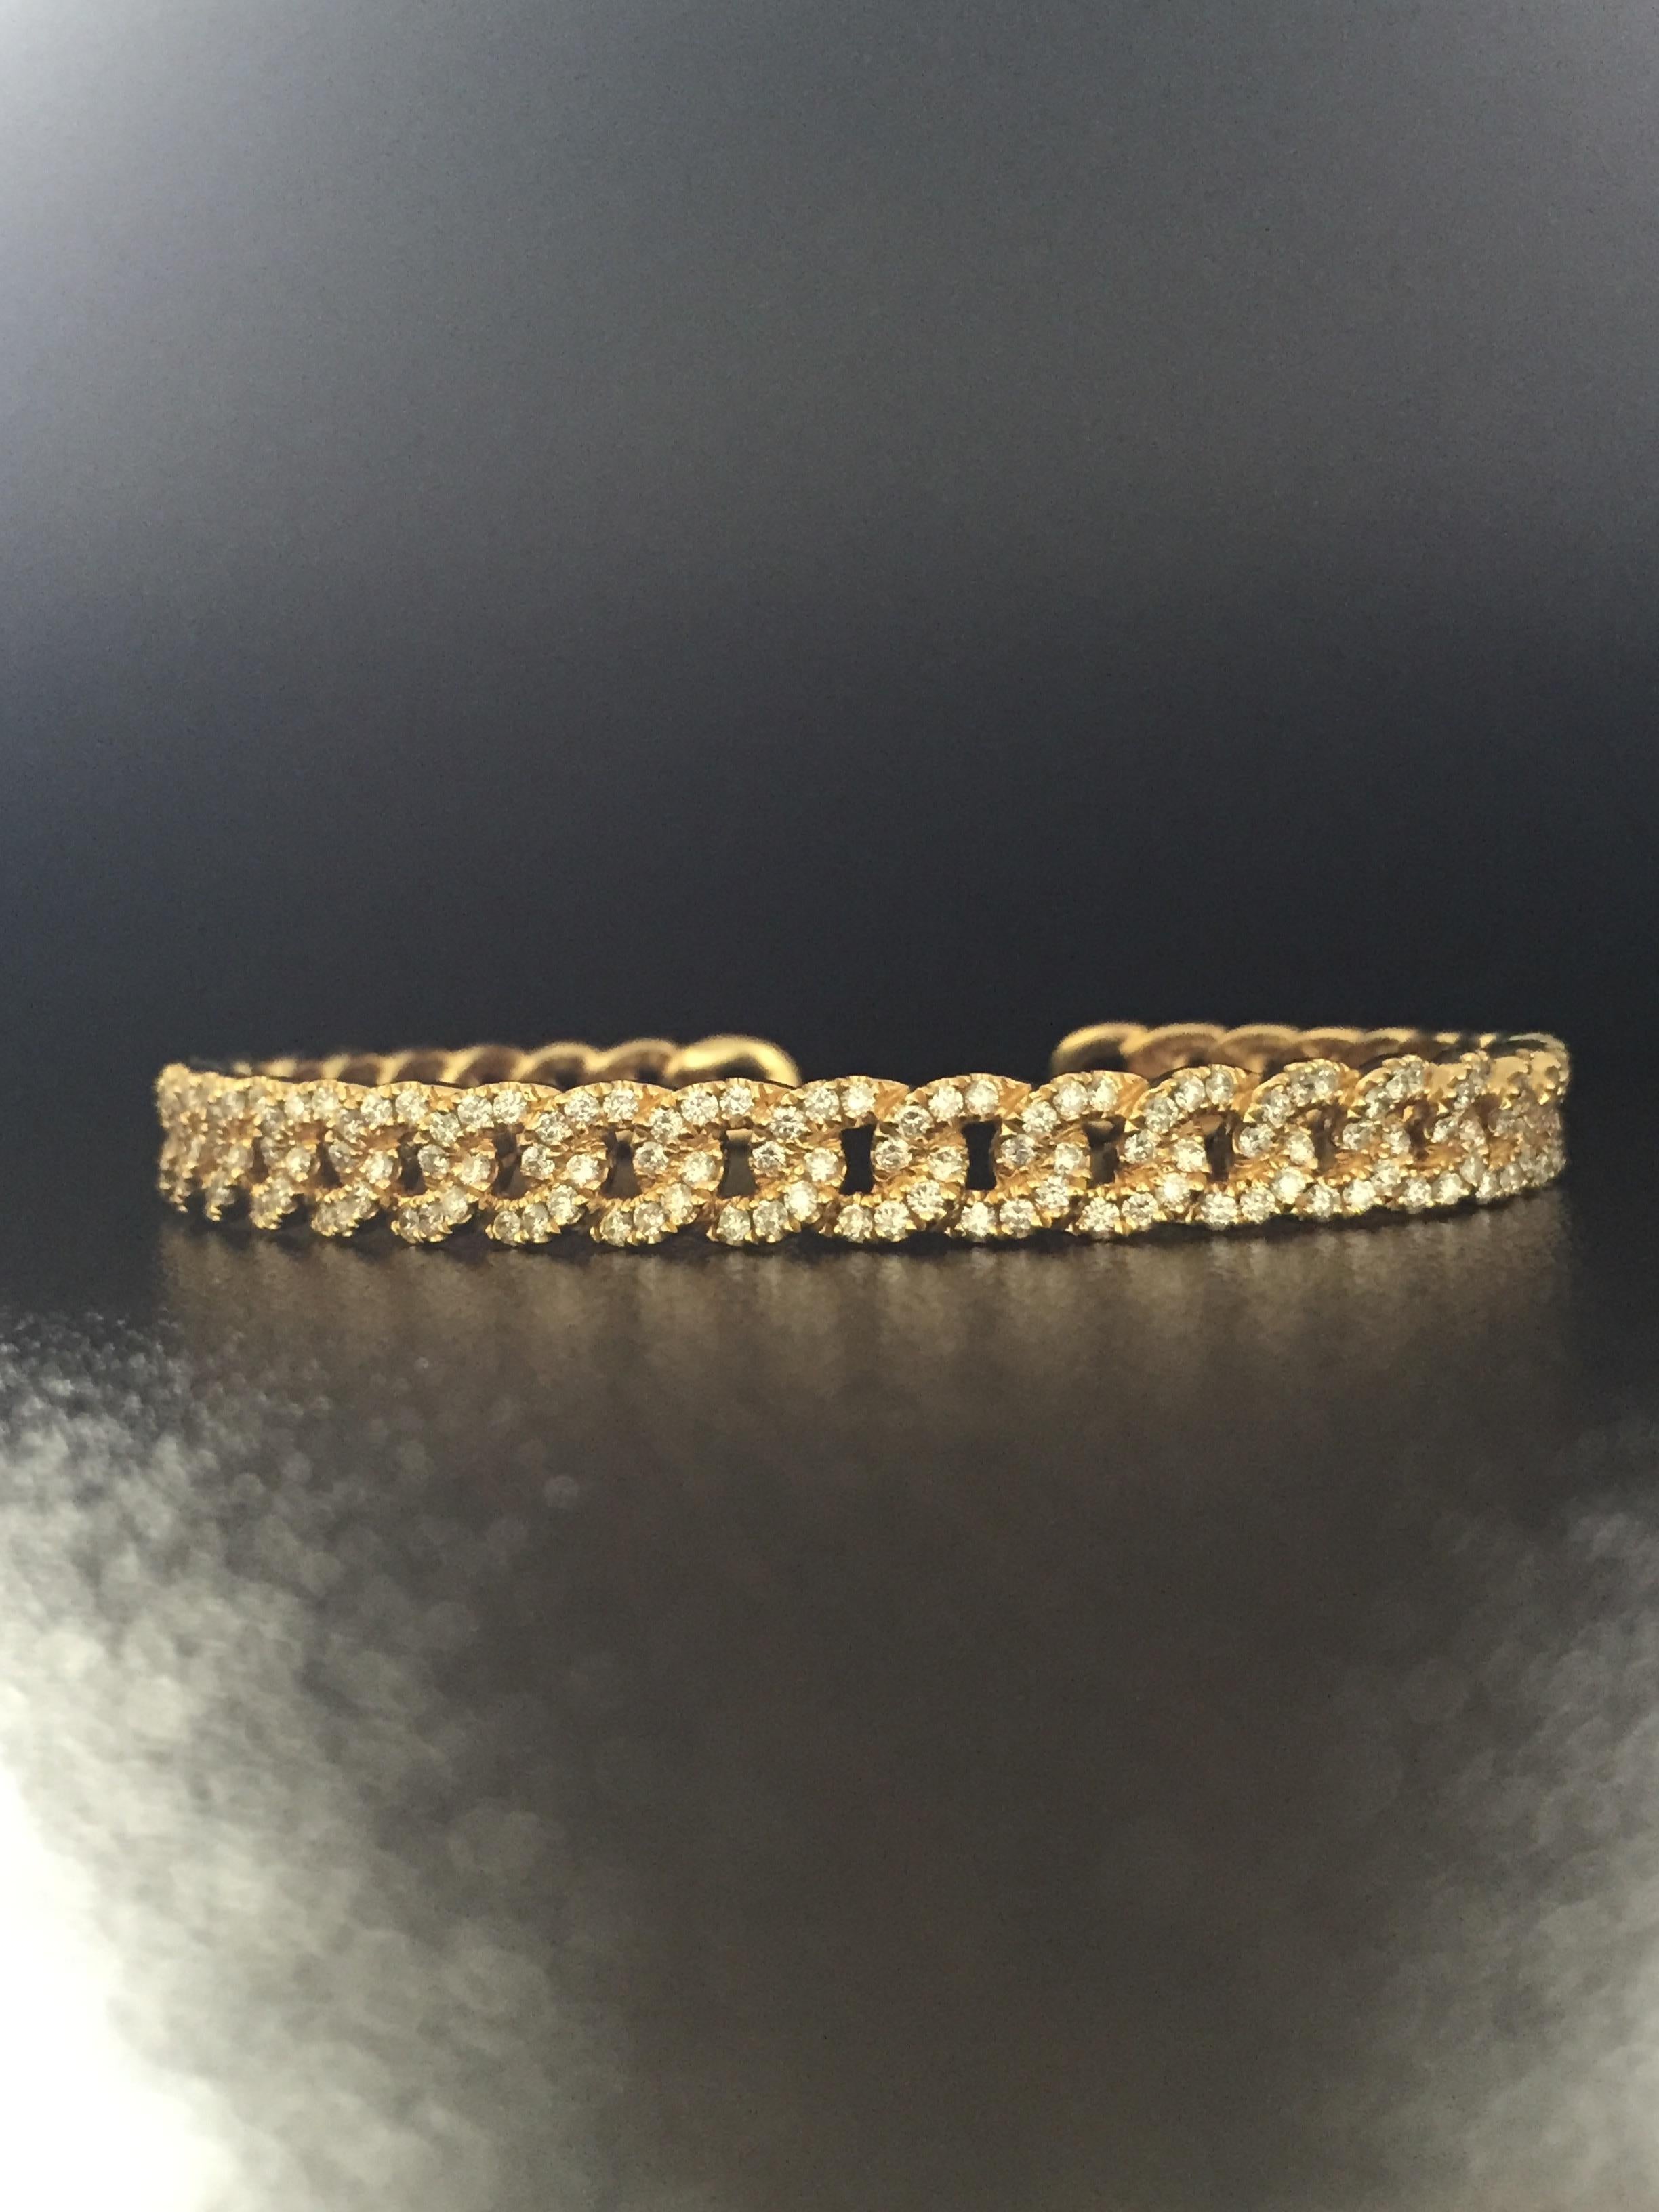 Italian made Diamond cuff bangle set in 18K yellow gold. The diamonds are set in a 